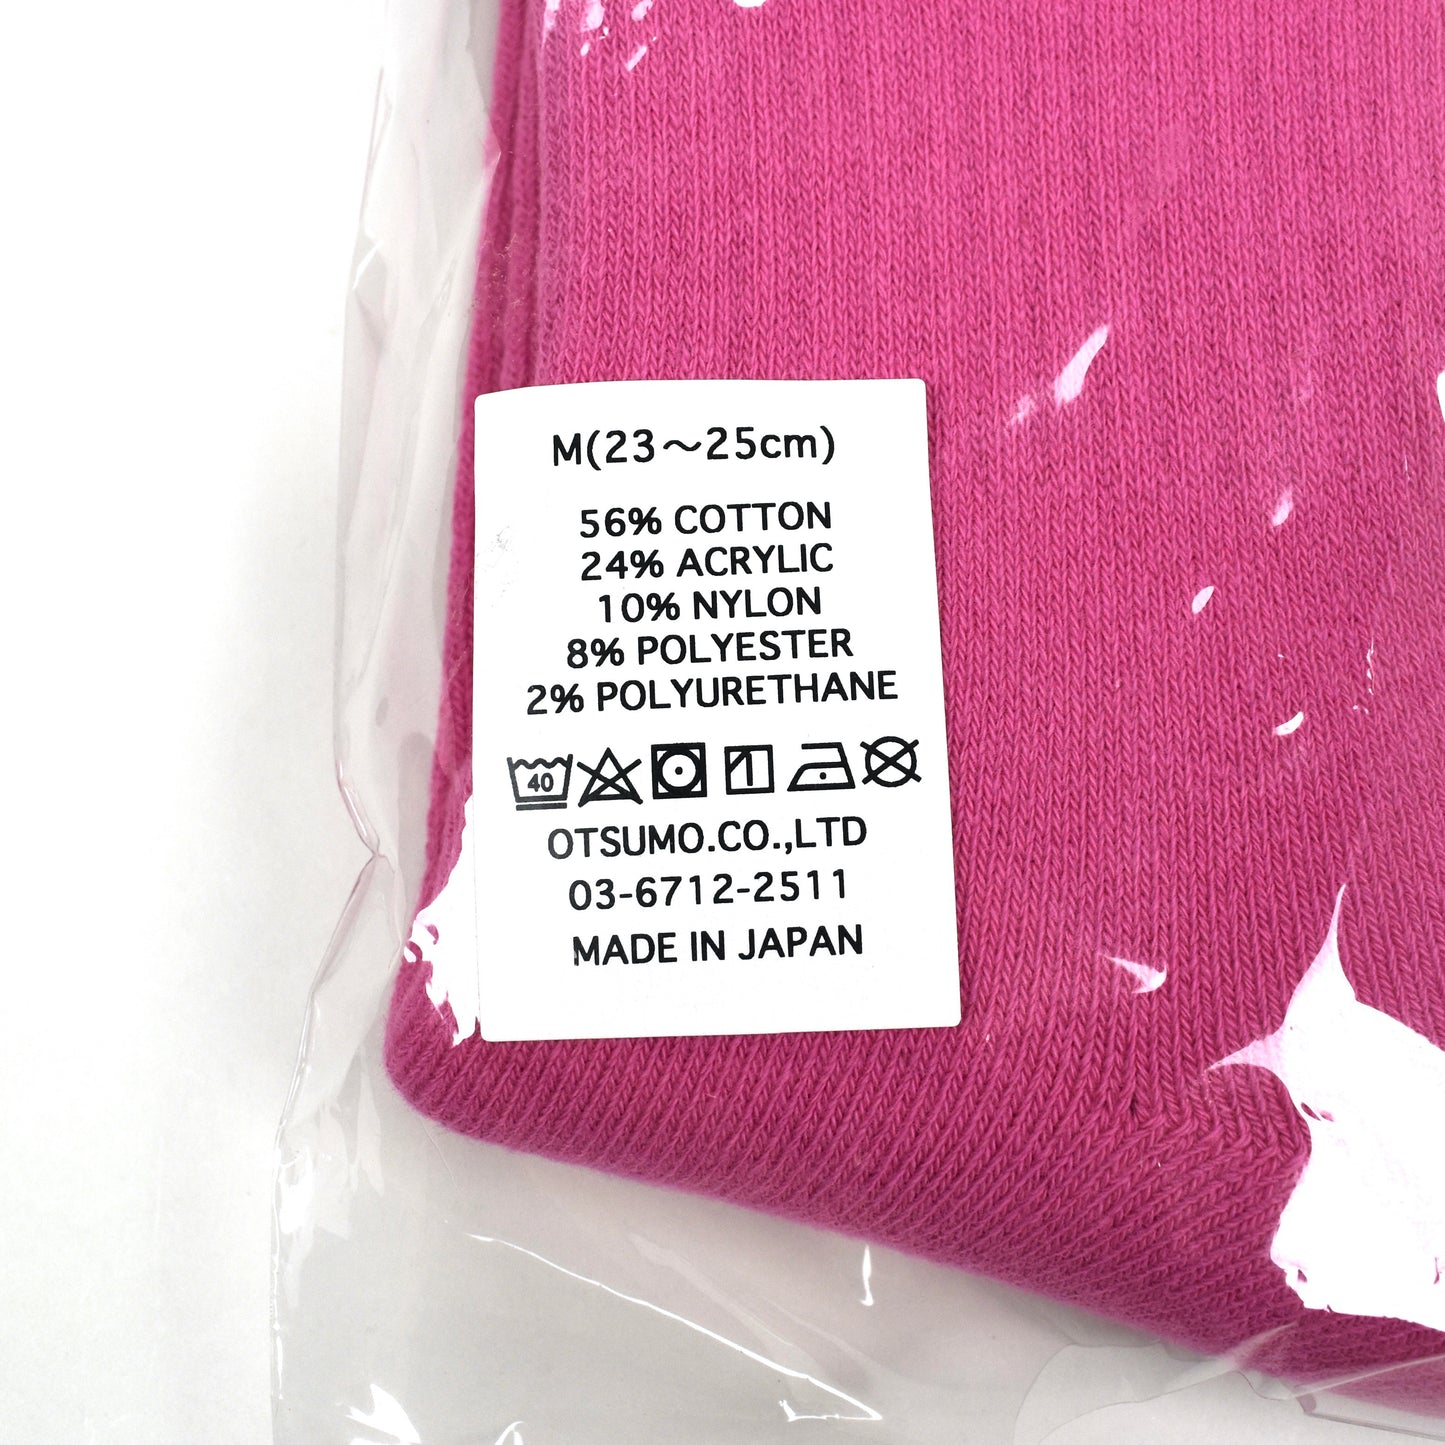 Cactus Plant Flea Market - CPFM Logo Knit Socks (Pink)